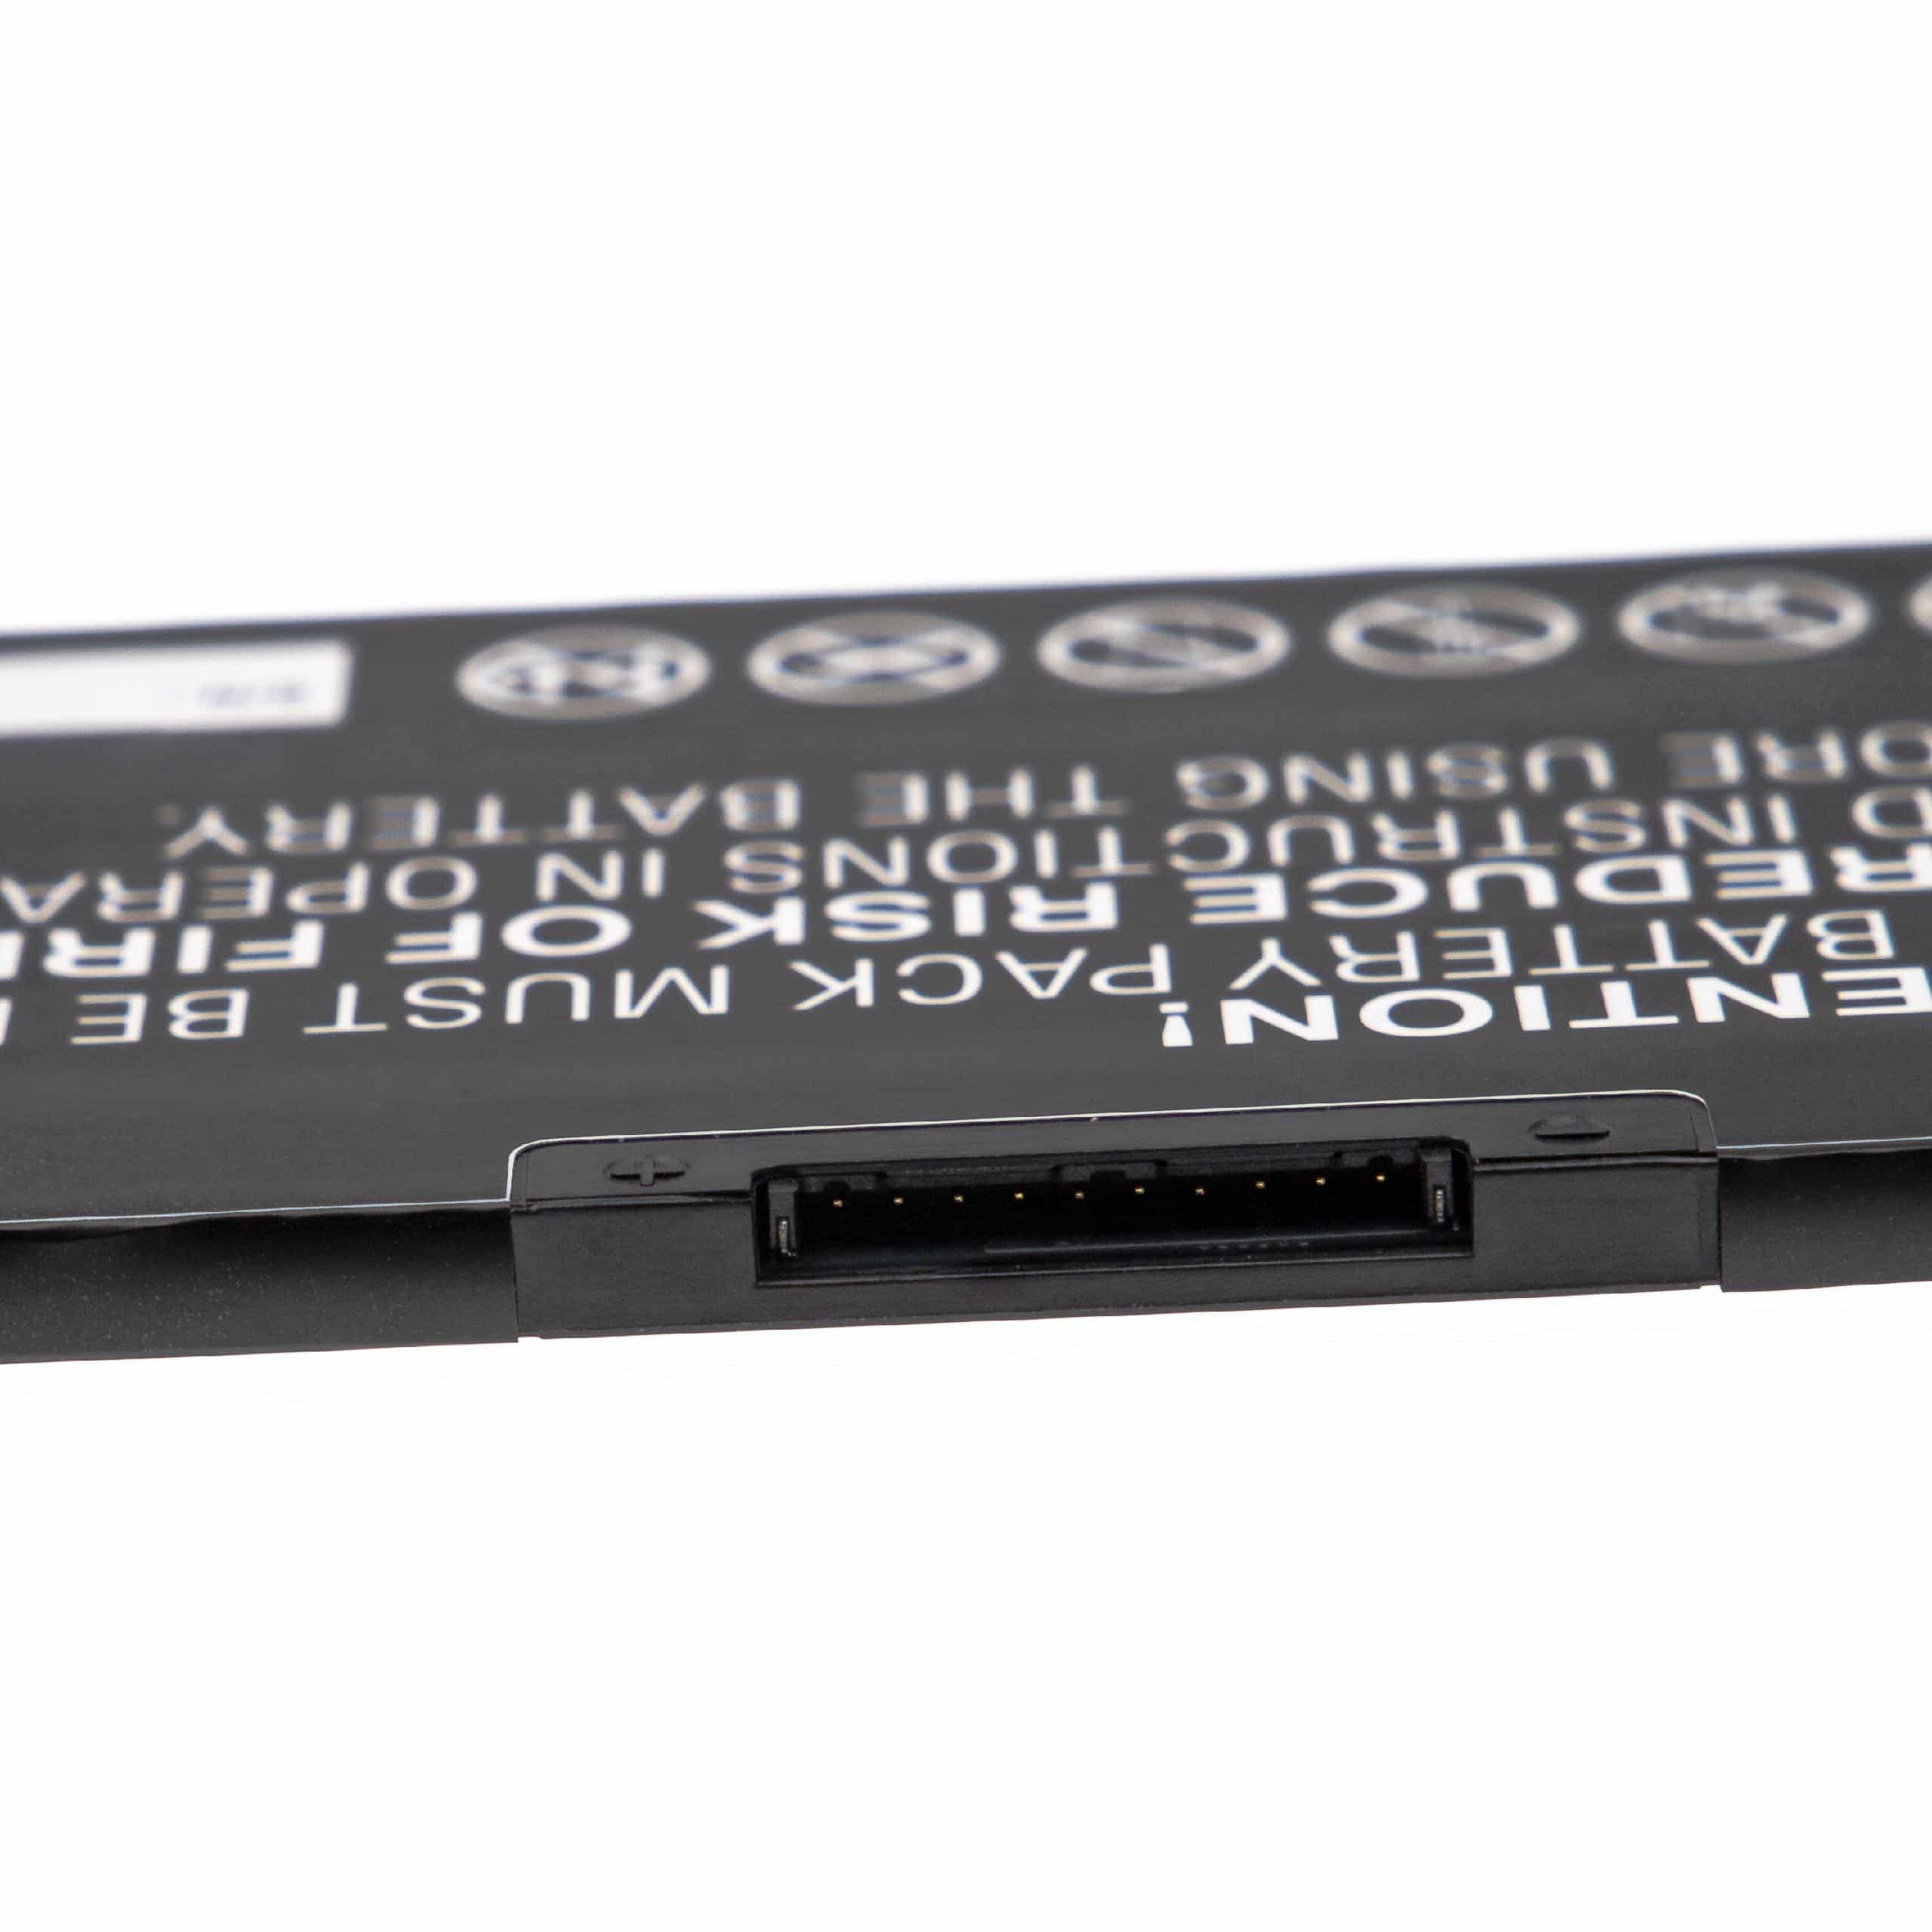 Akumulator do laptopa zamiennik Dell MV07R, W5W19, 0JJRRD, 4ICP6/55/74, 72WGV, JJRRD - 4150 mAh 15,2 V LiPo